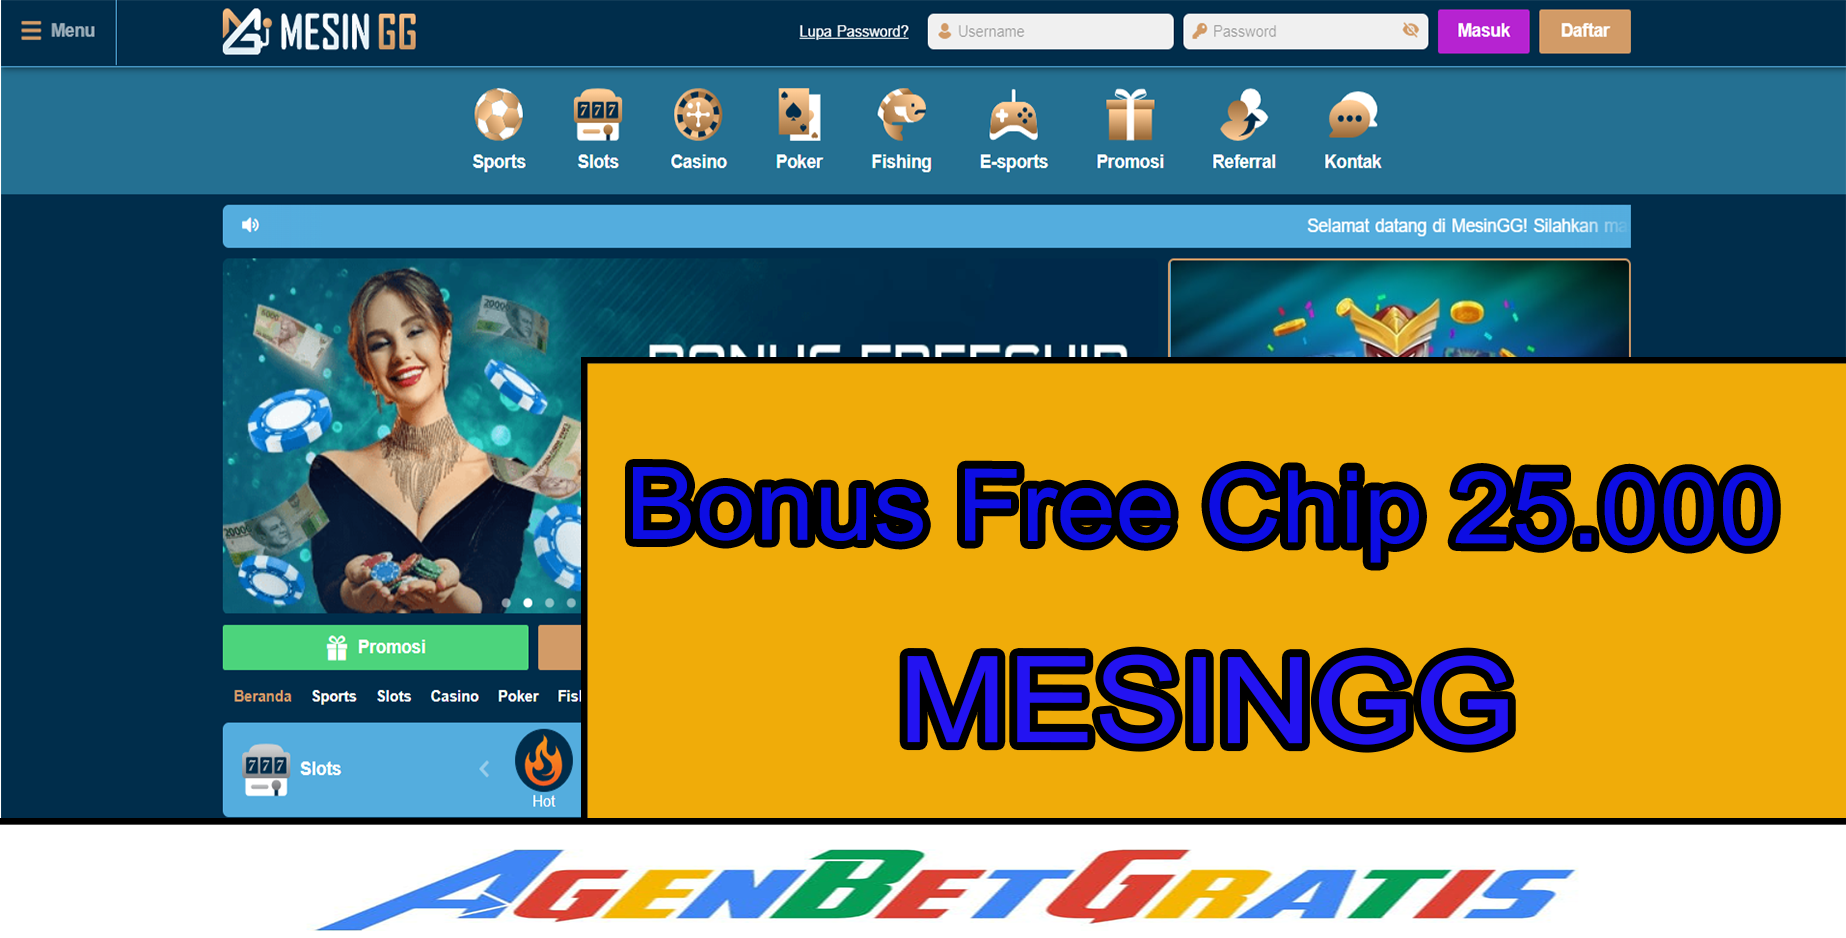 MesinGG - Bonus Free Chip 25.000